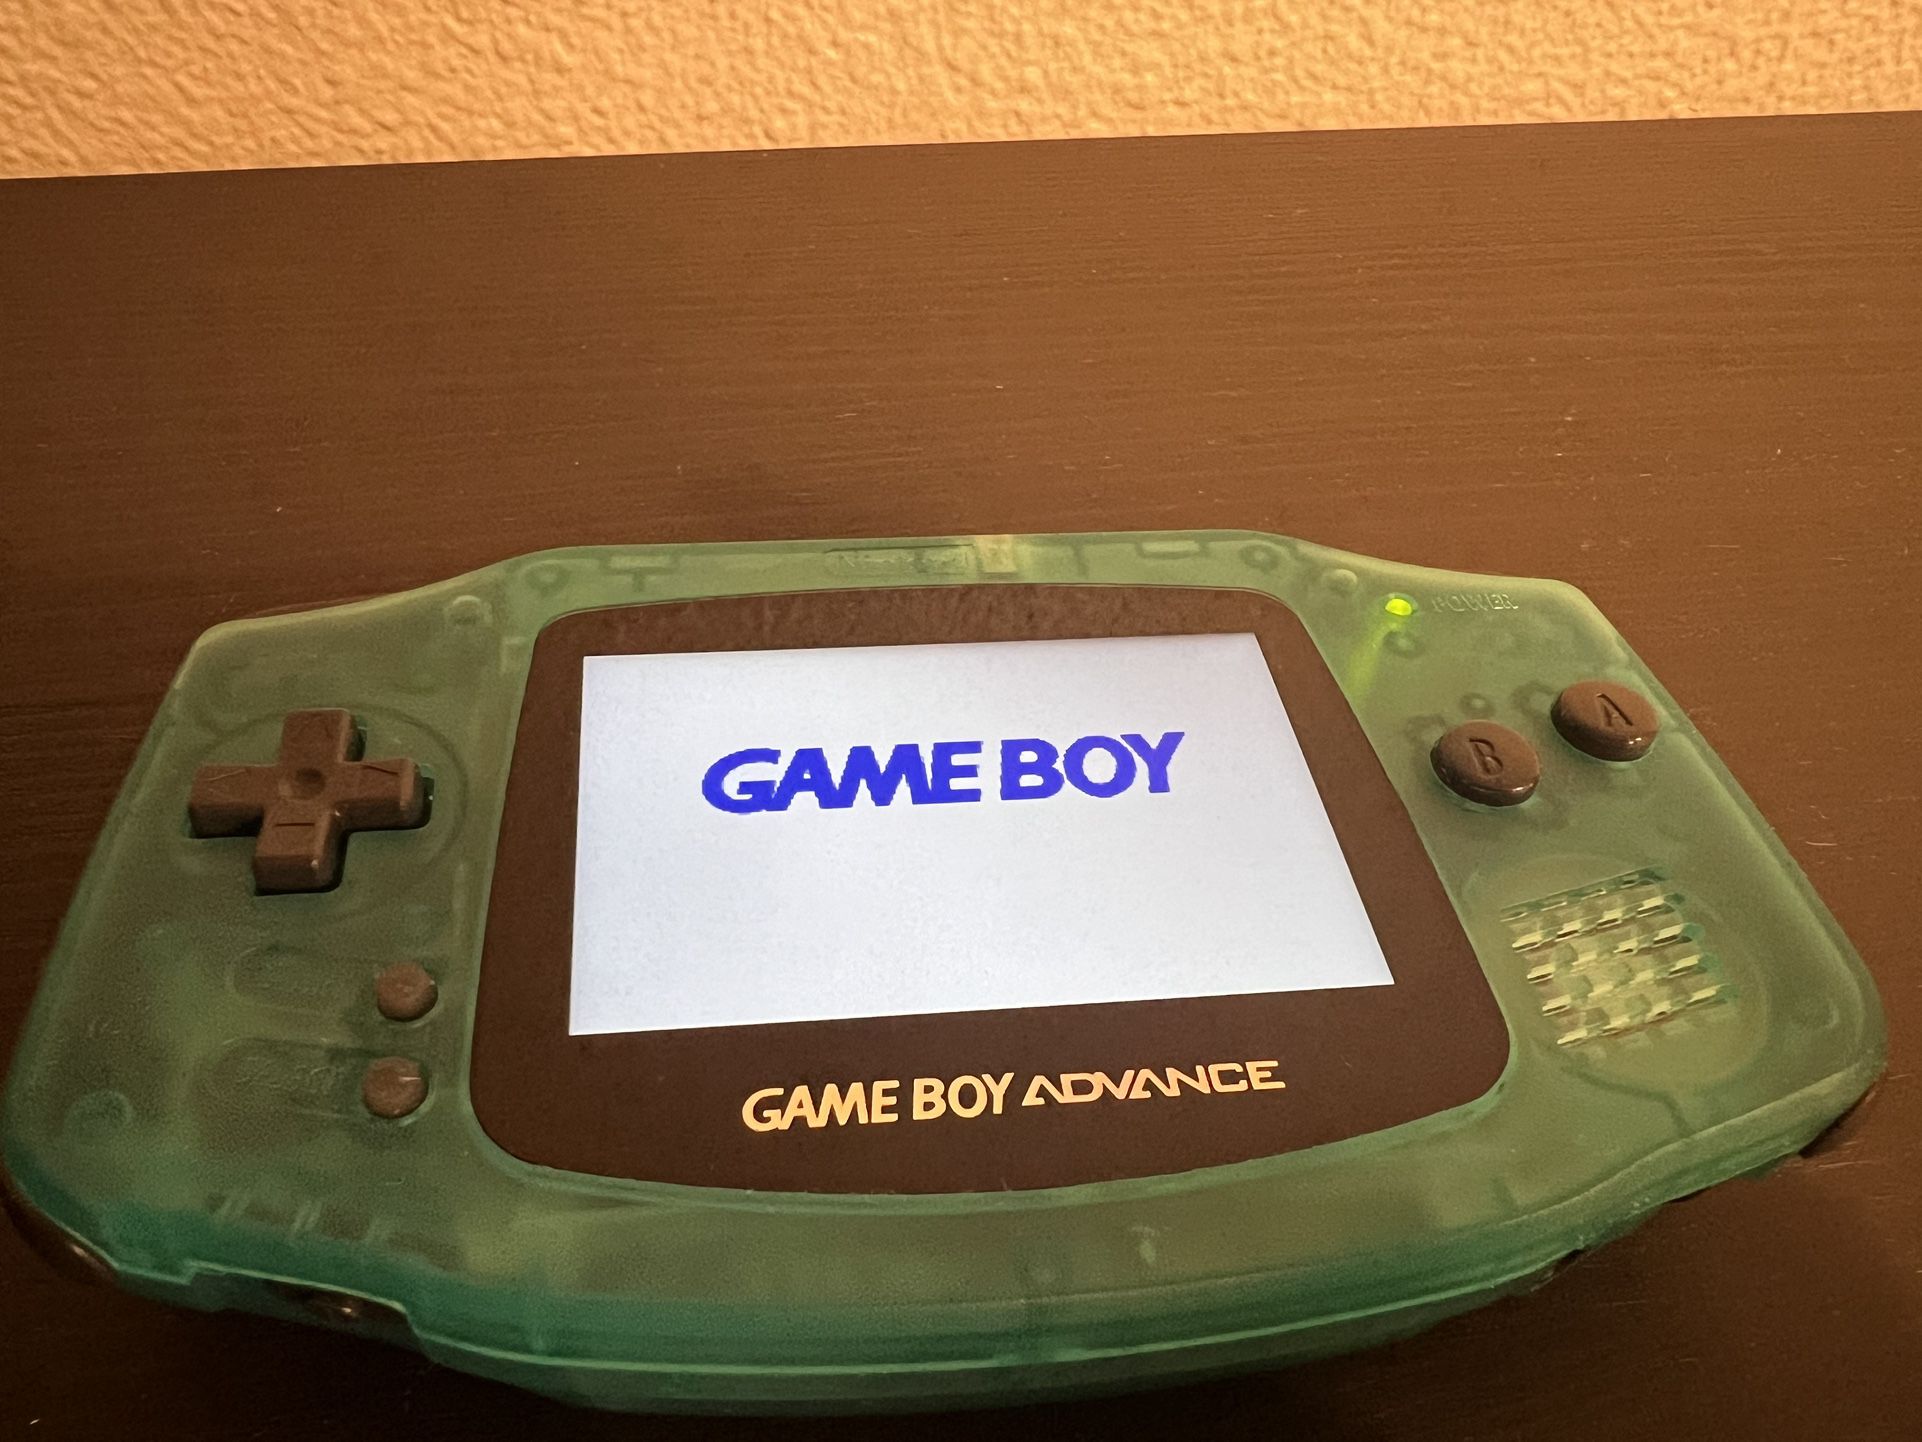 Modded Gameboy Advance